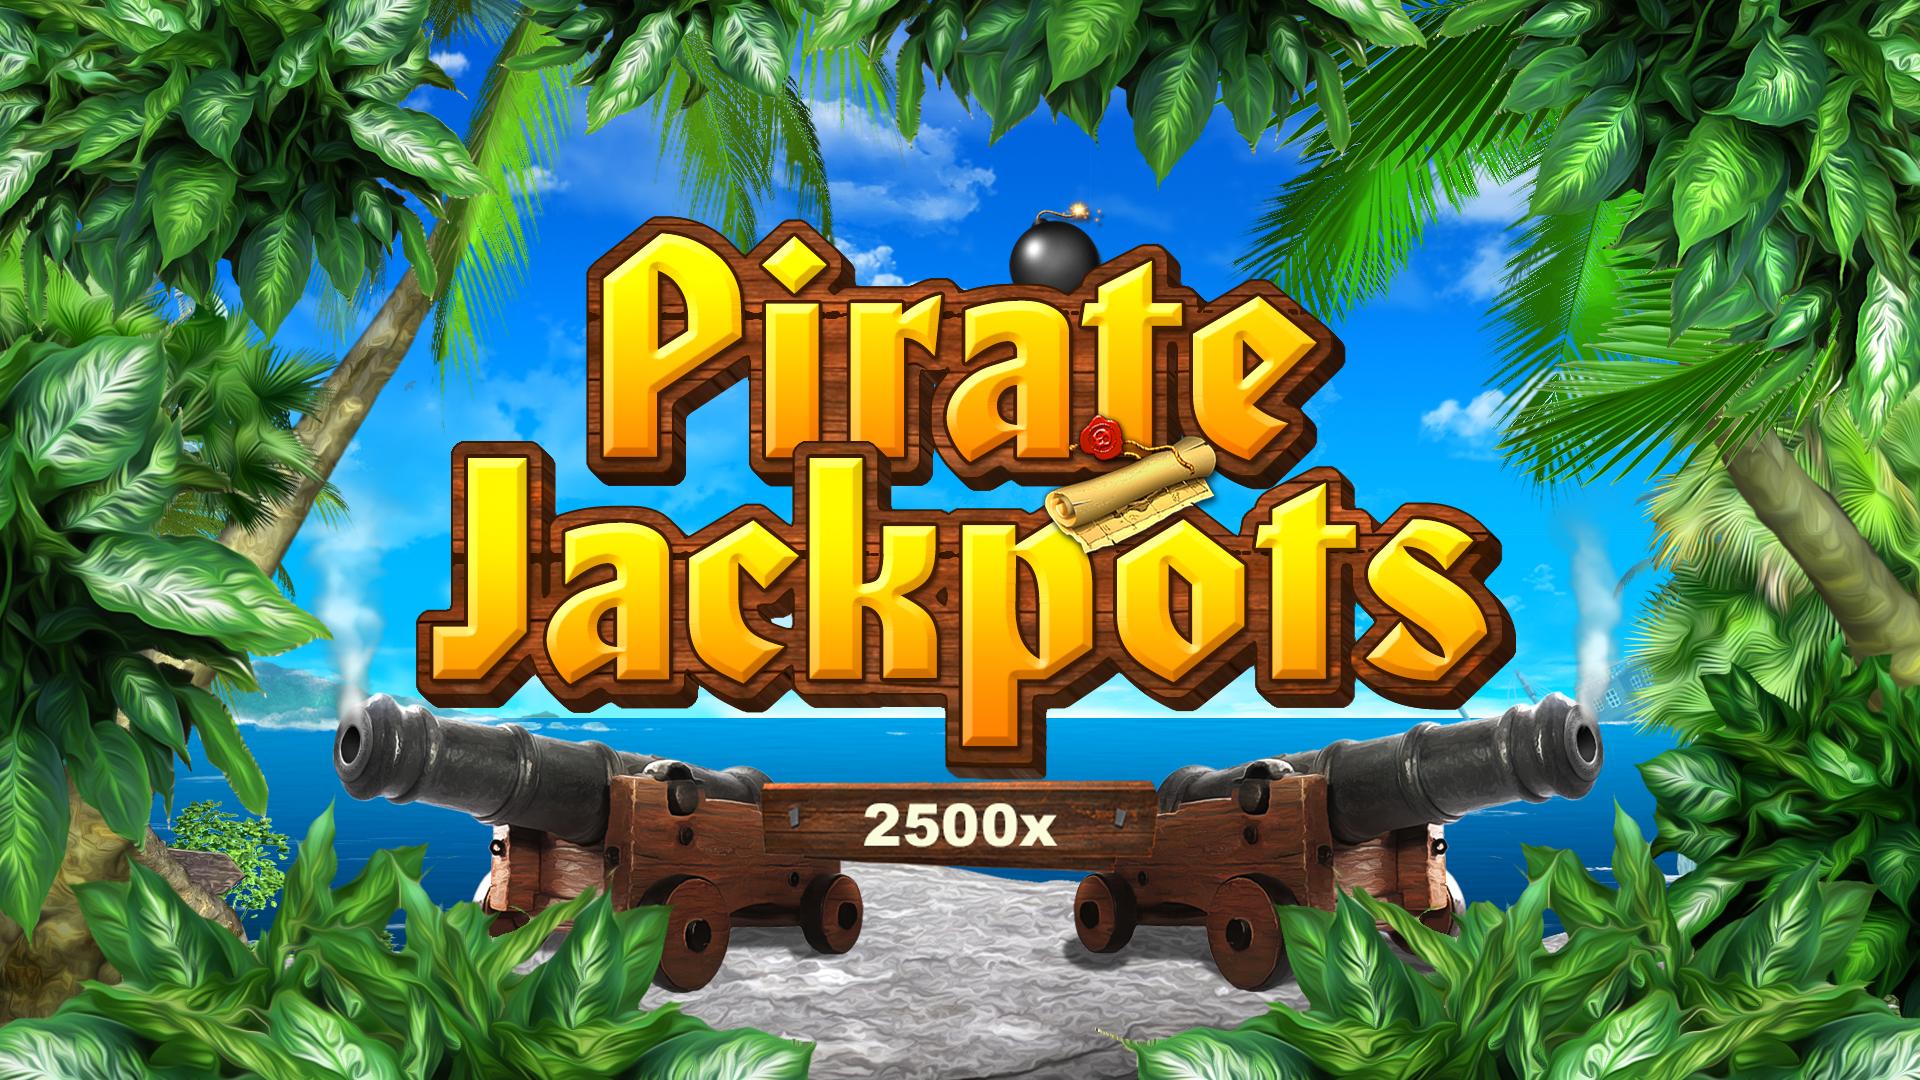 Pirate Jackpots | Promotion pack | Online slot